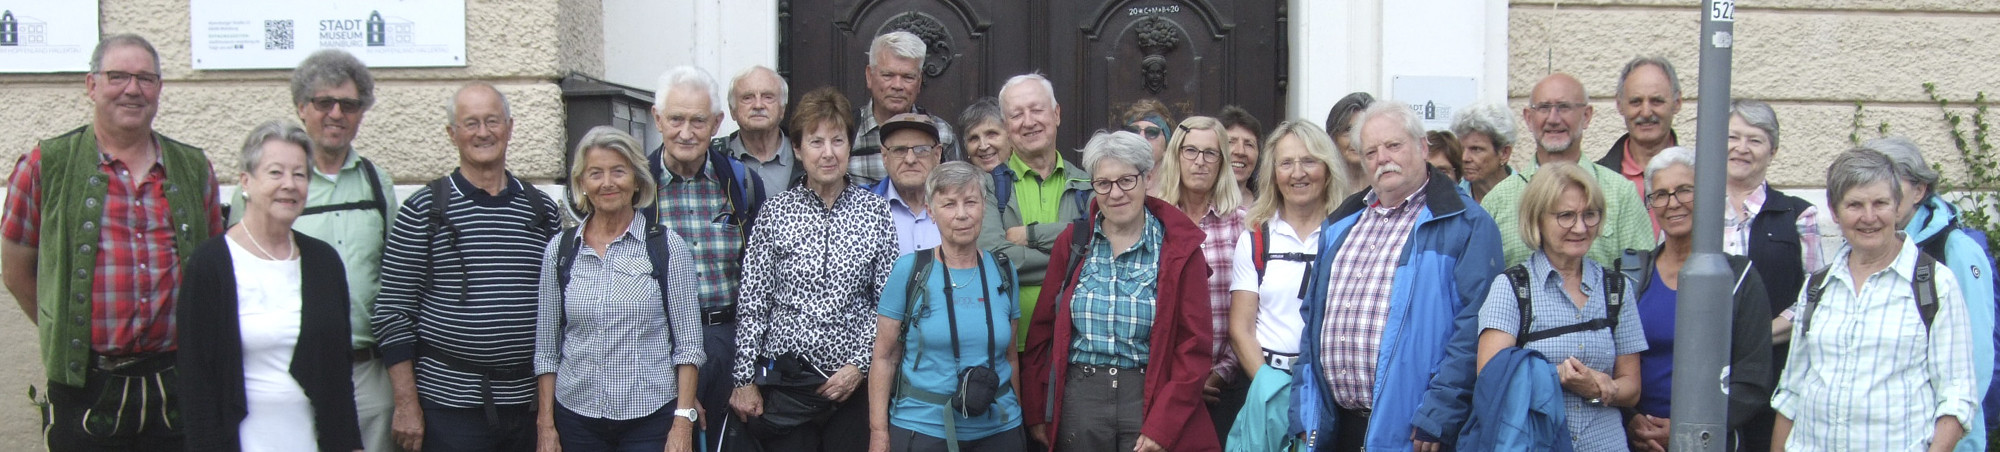 Seniorengruppe DAV Regensburg, Frau Buchberger und Herr Franz  vor dem Eingang Knabenschule